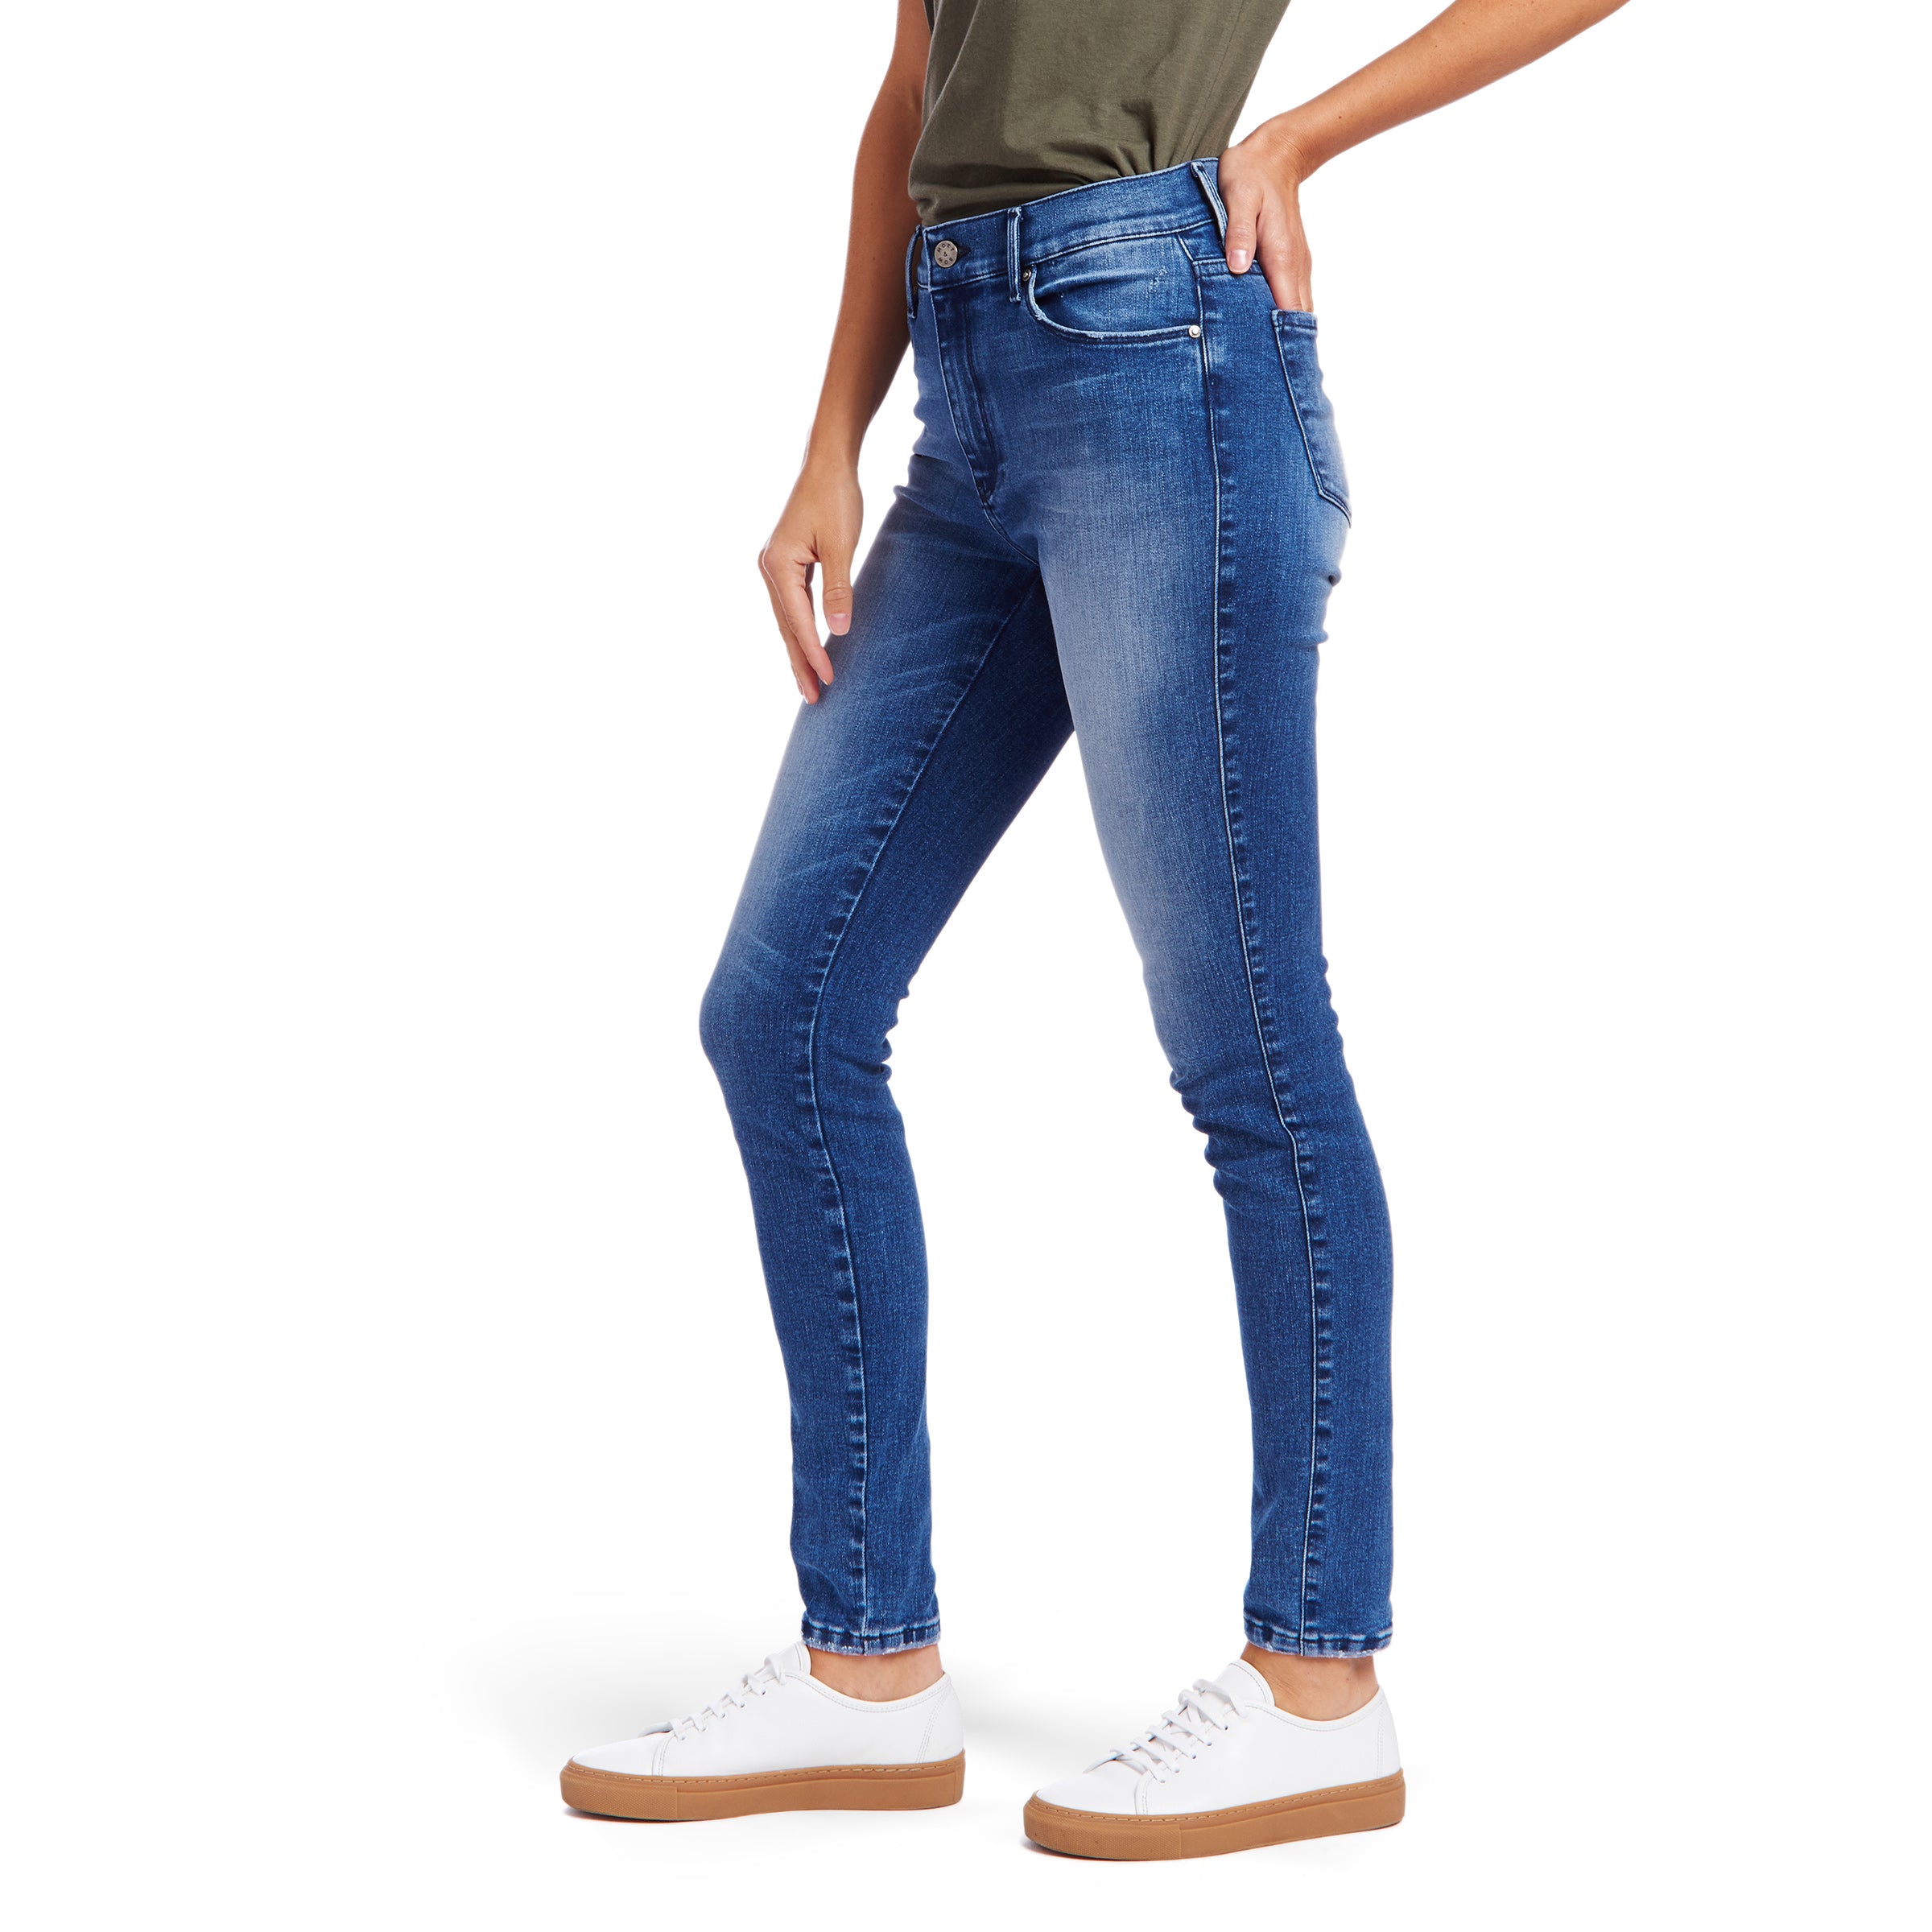 Women wearing Bleu Médium High Rise Skinny Moore Jeans